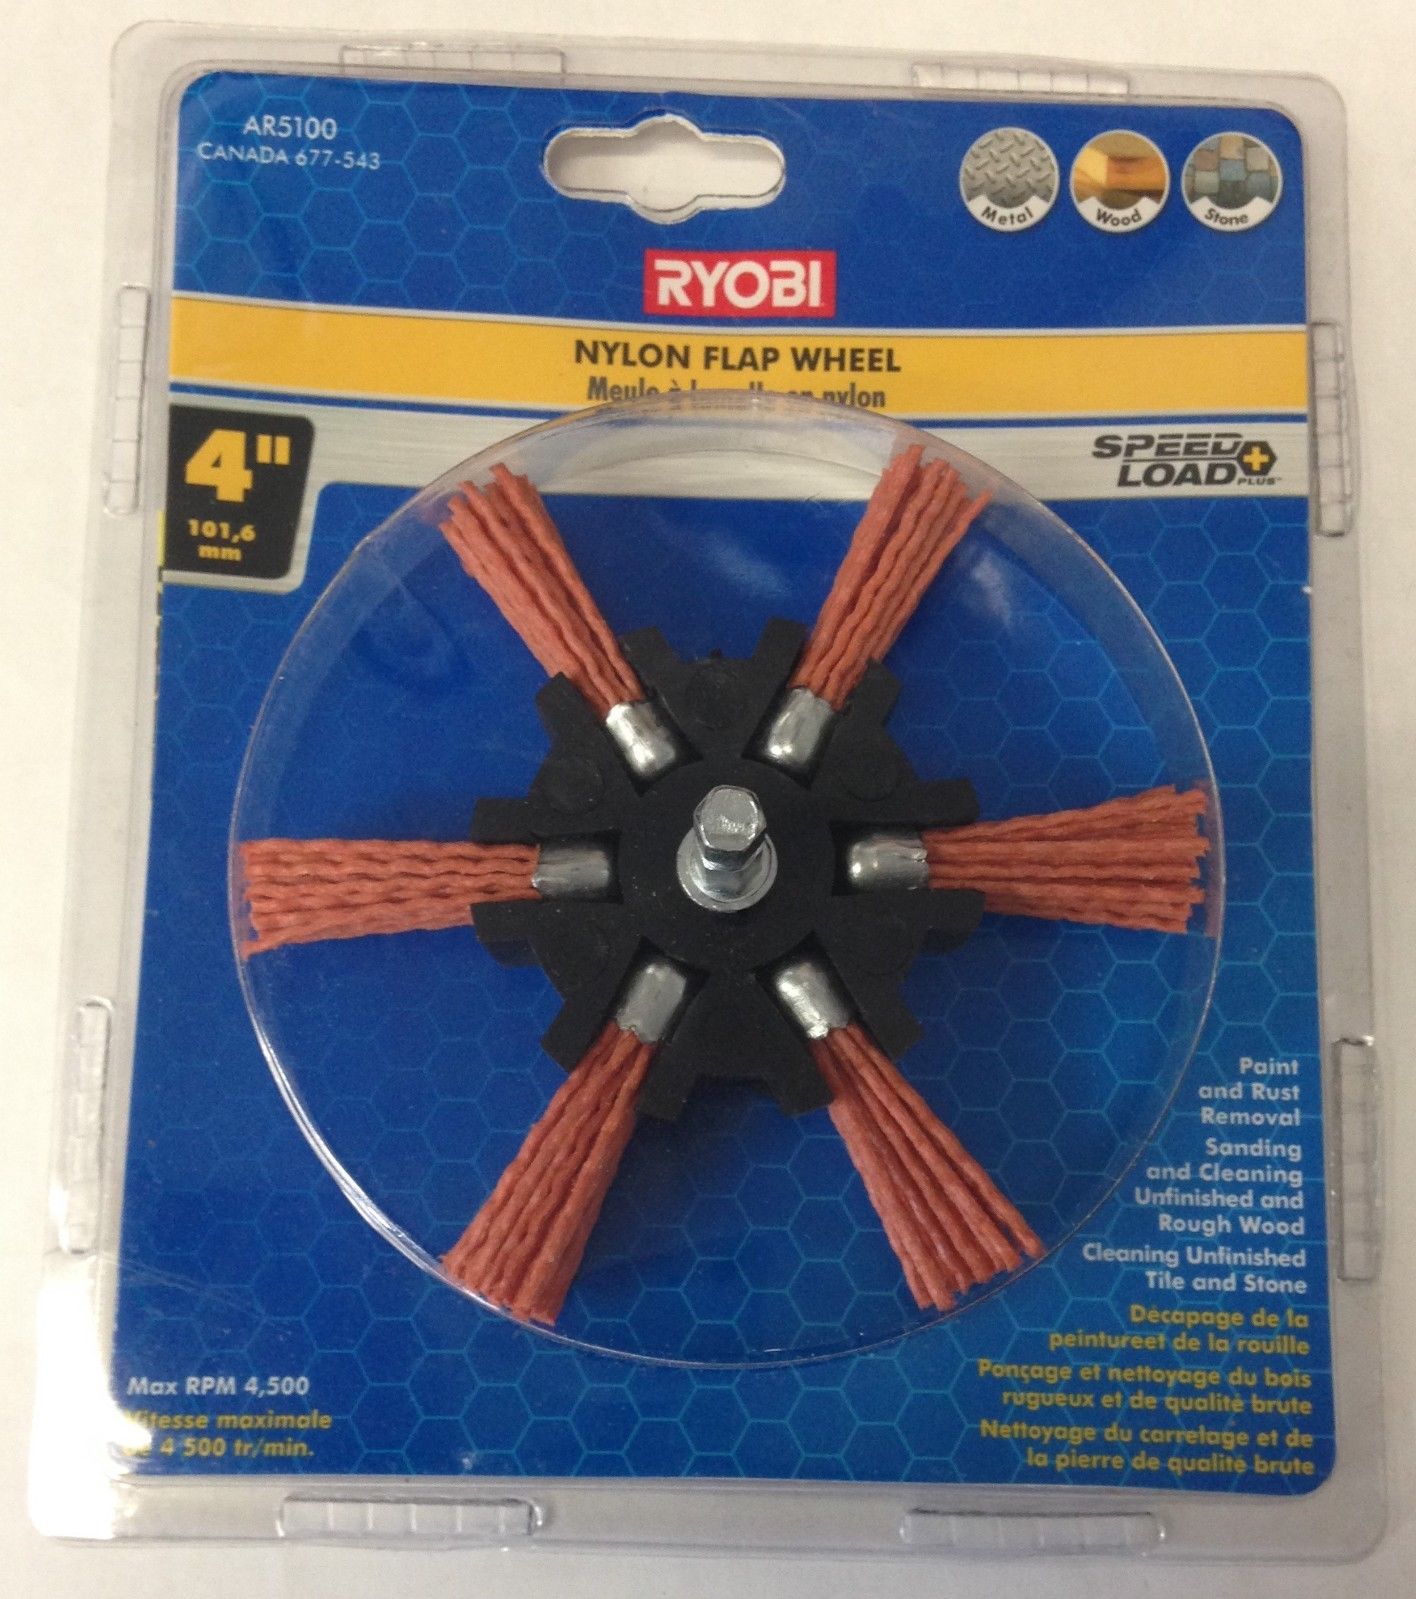 Ryobi AR5100 4" Speed Load Nylon Flap Wheel For Paint & Rust Removal